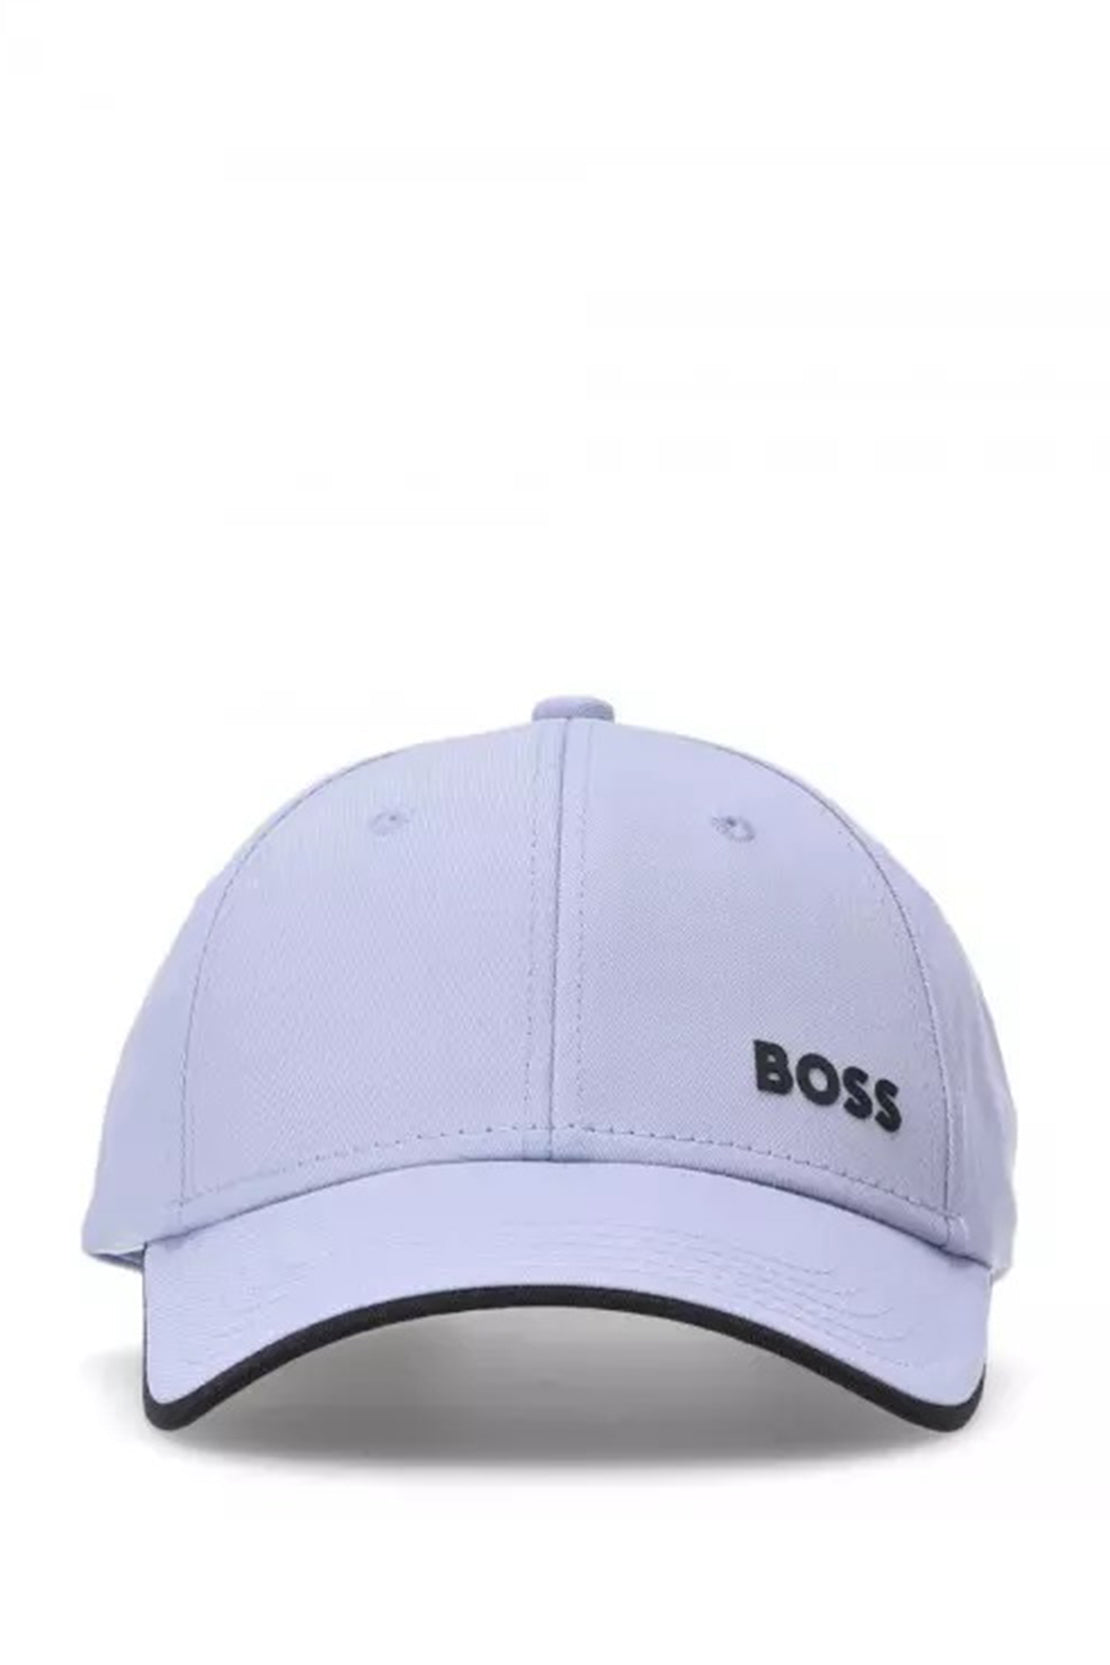 BOSS - CAP-BOLD - Purple Cotton Twill Cap With Printed Logo 50505834 527